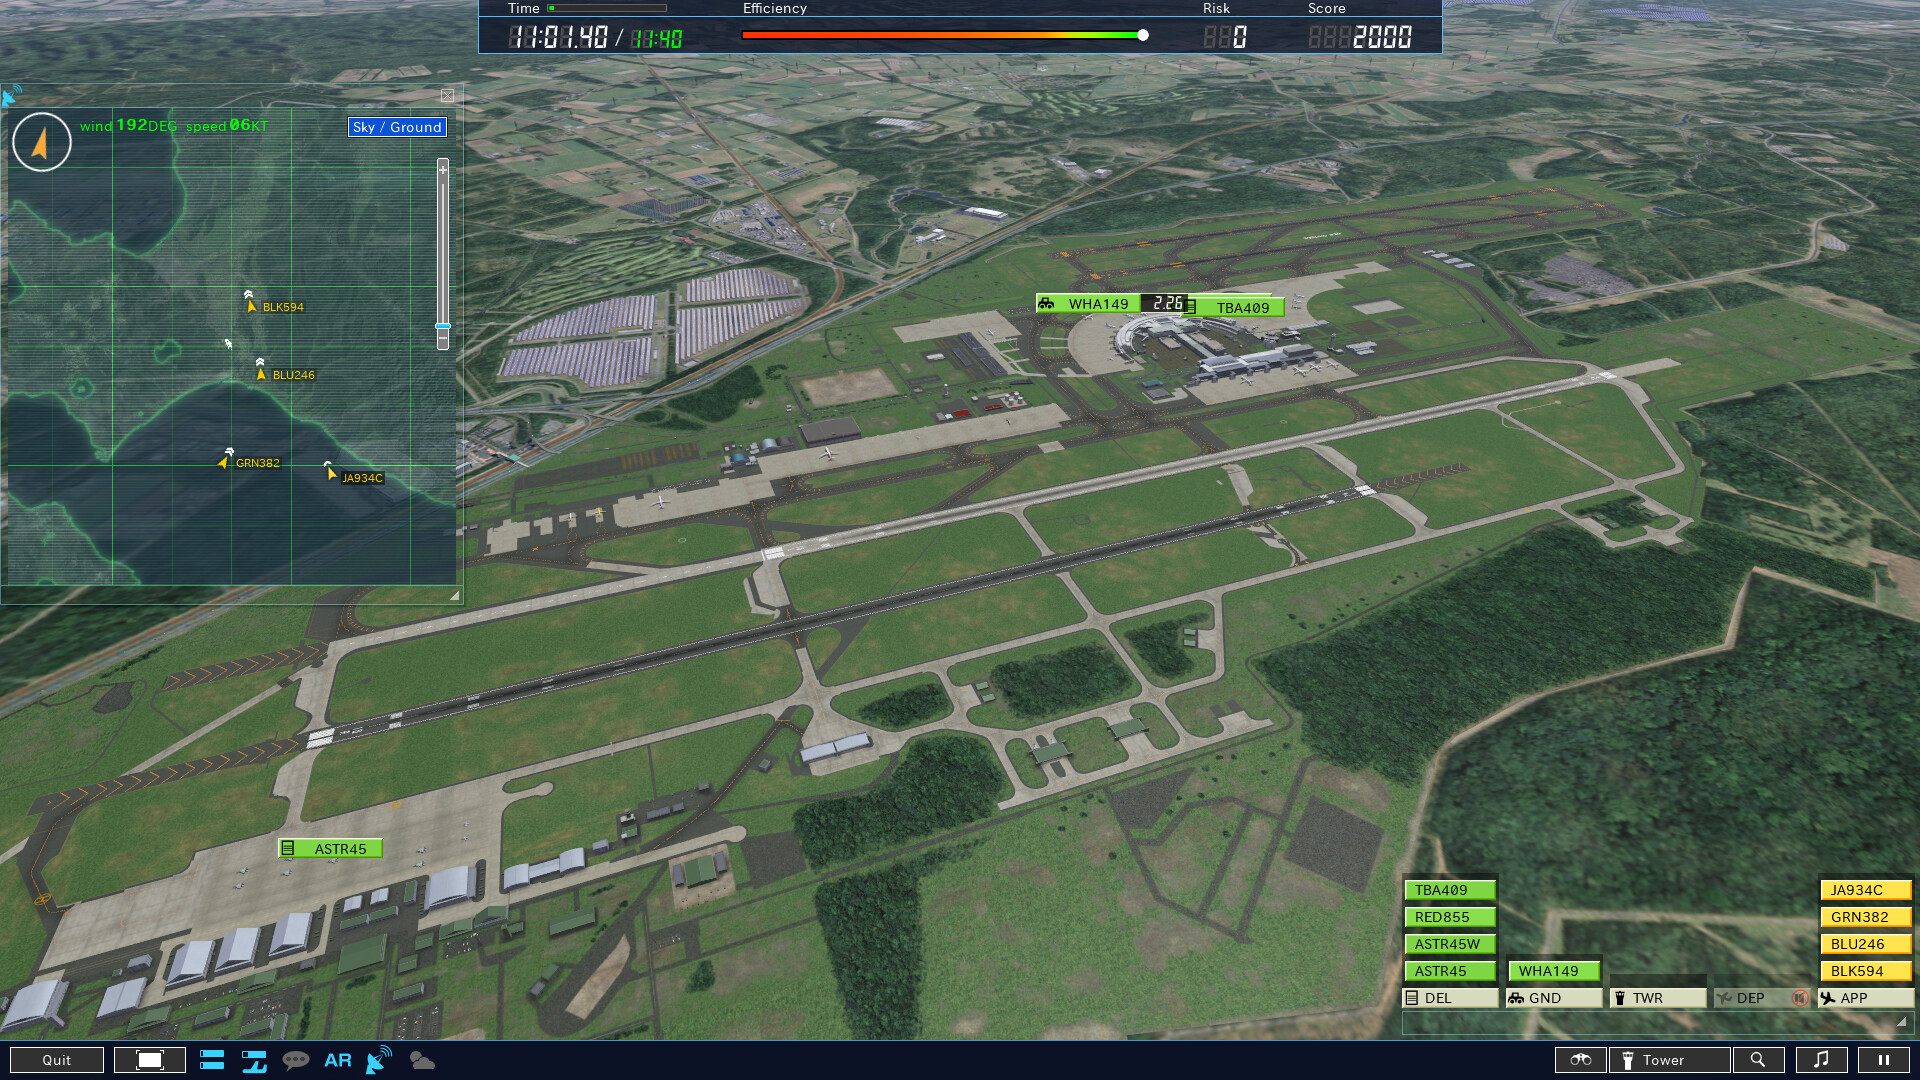 ATC4: Airport NEW CHITOSE [RJCC] Featured Screenshot #1